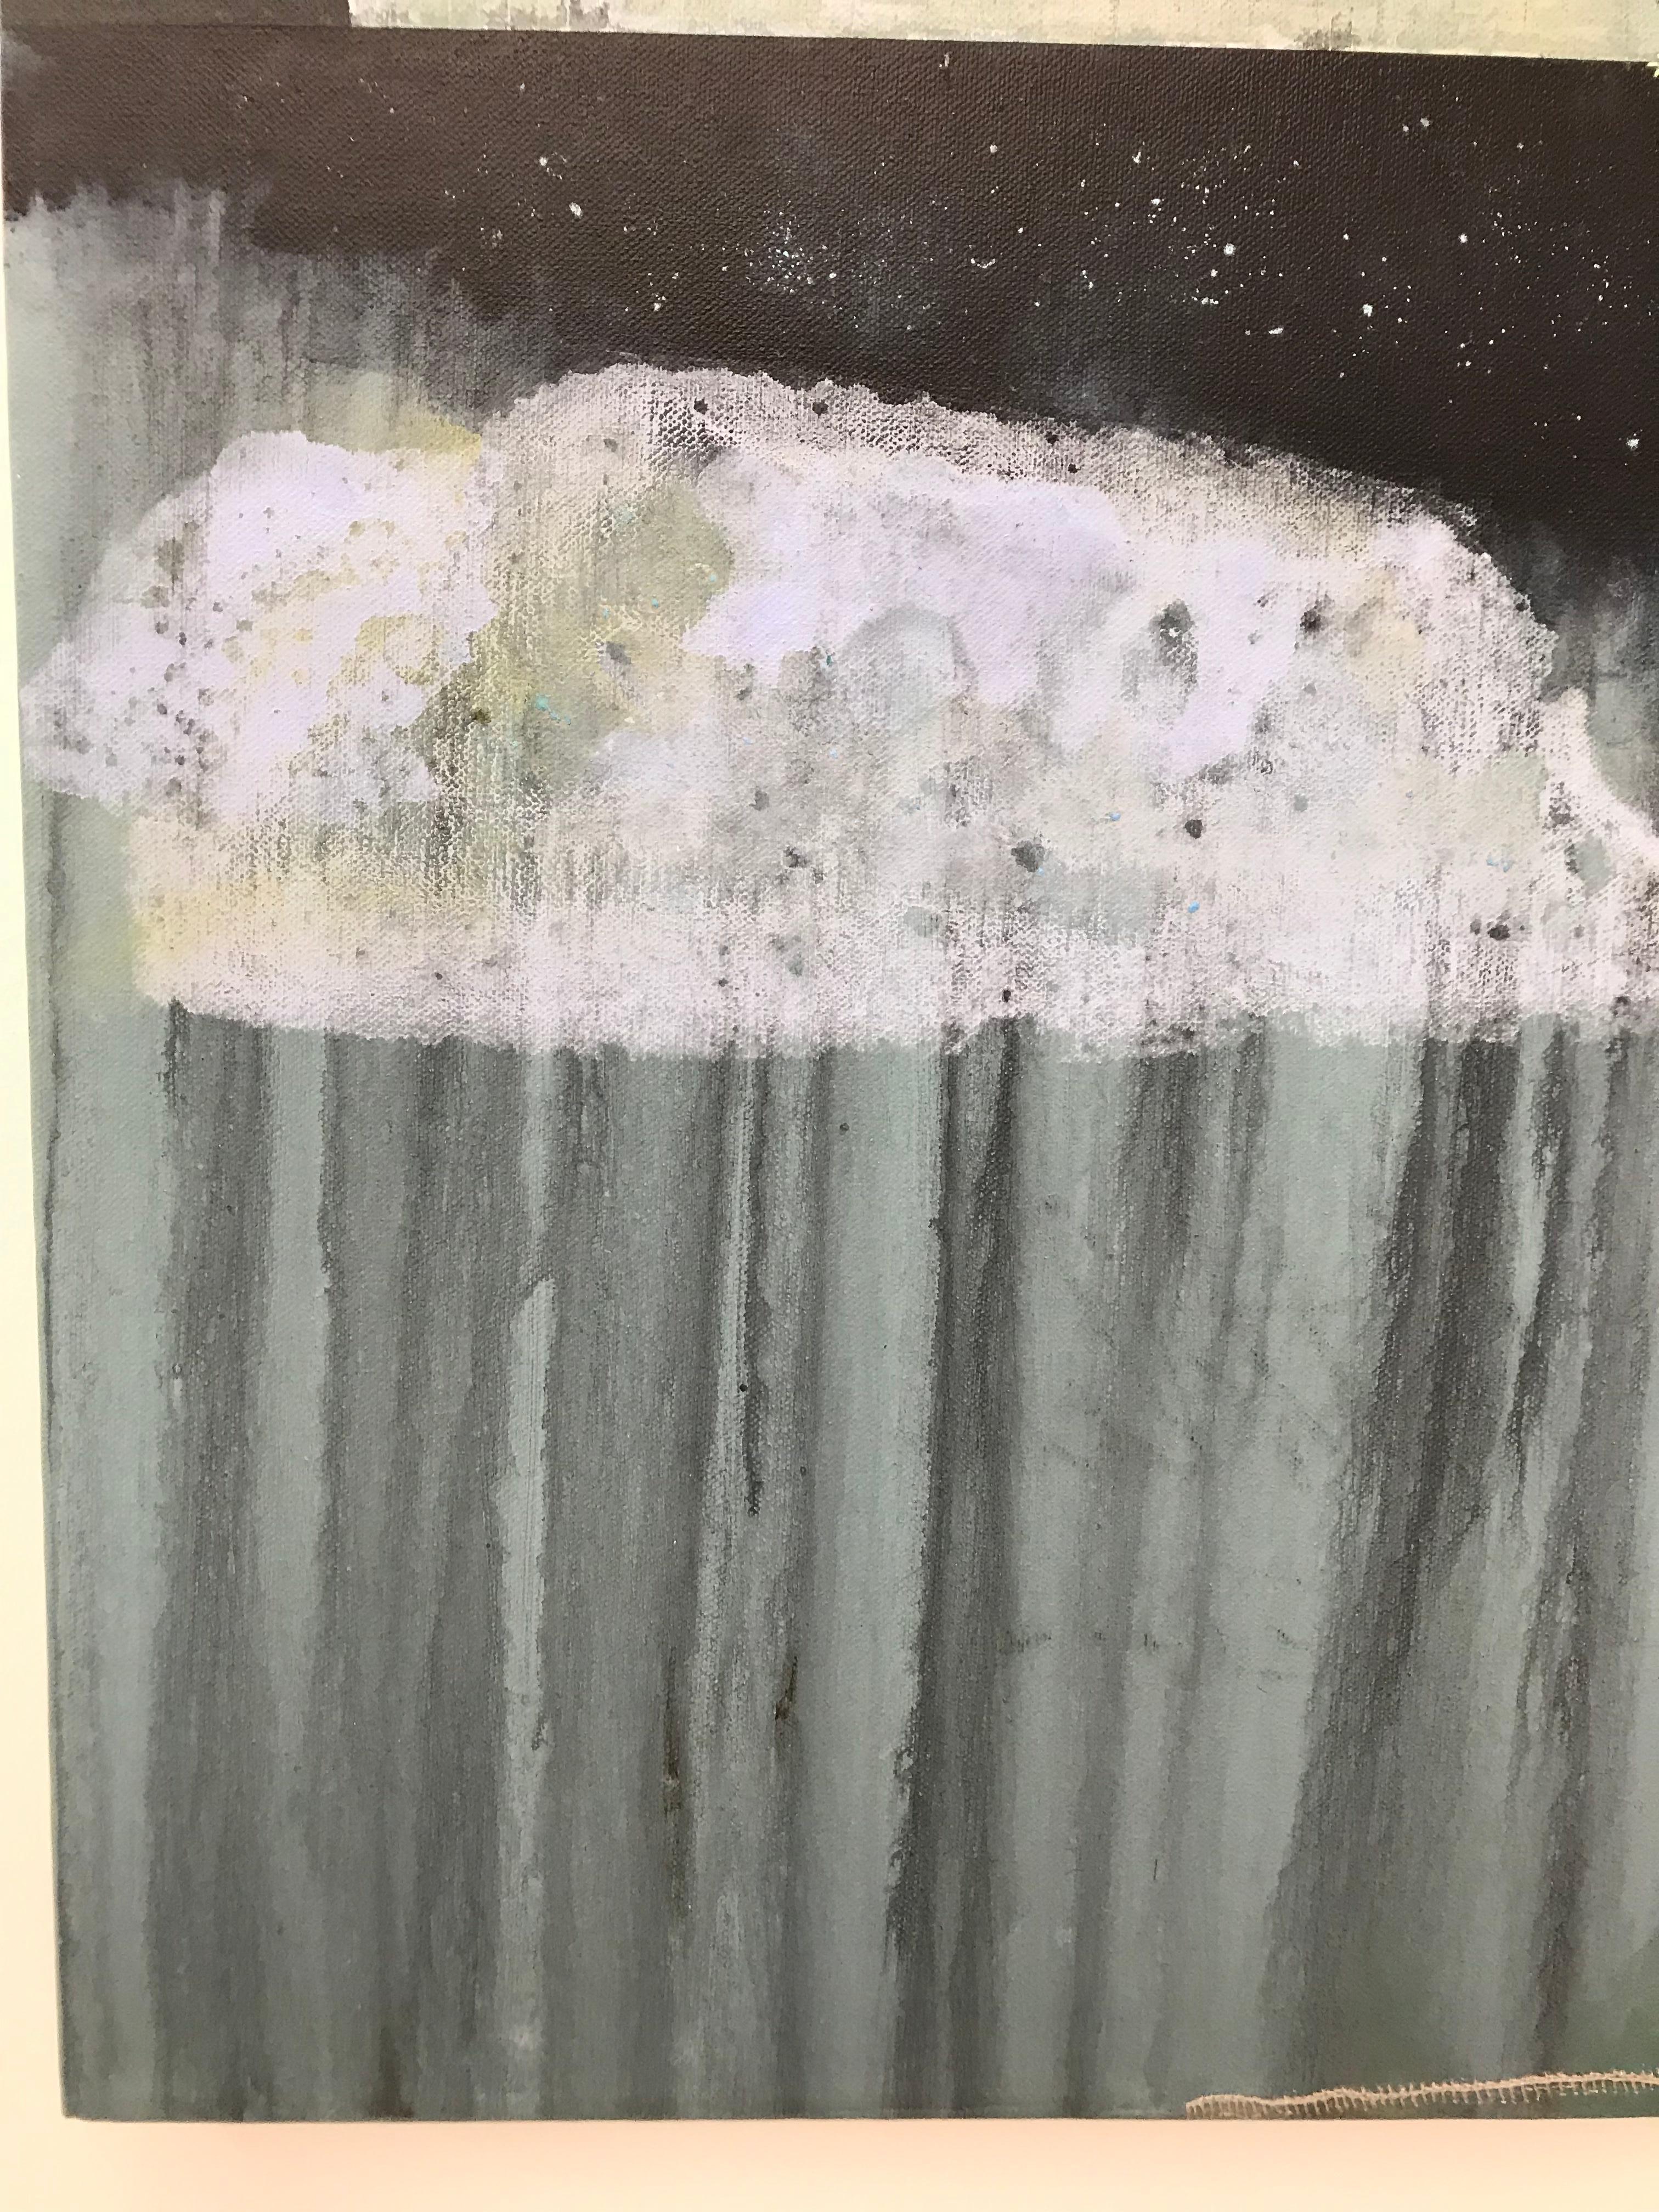 Where the sky hang  : contemporary, abstract art, acrylic paint, threads, grey - Gray Abstract Painting by Morakot Ketklao